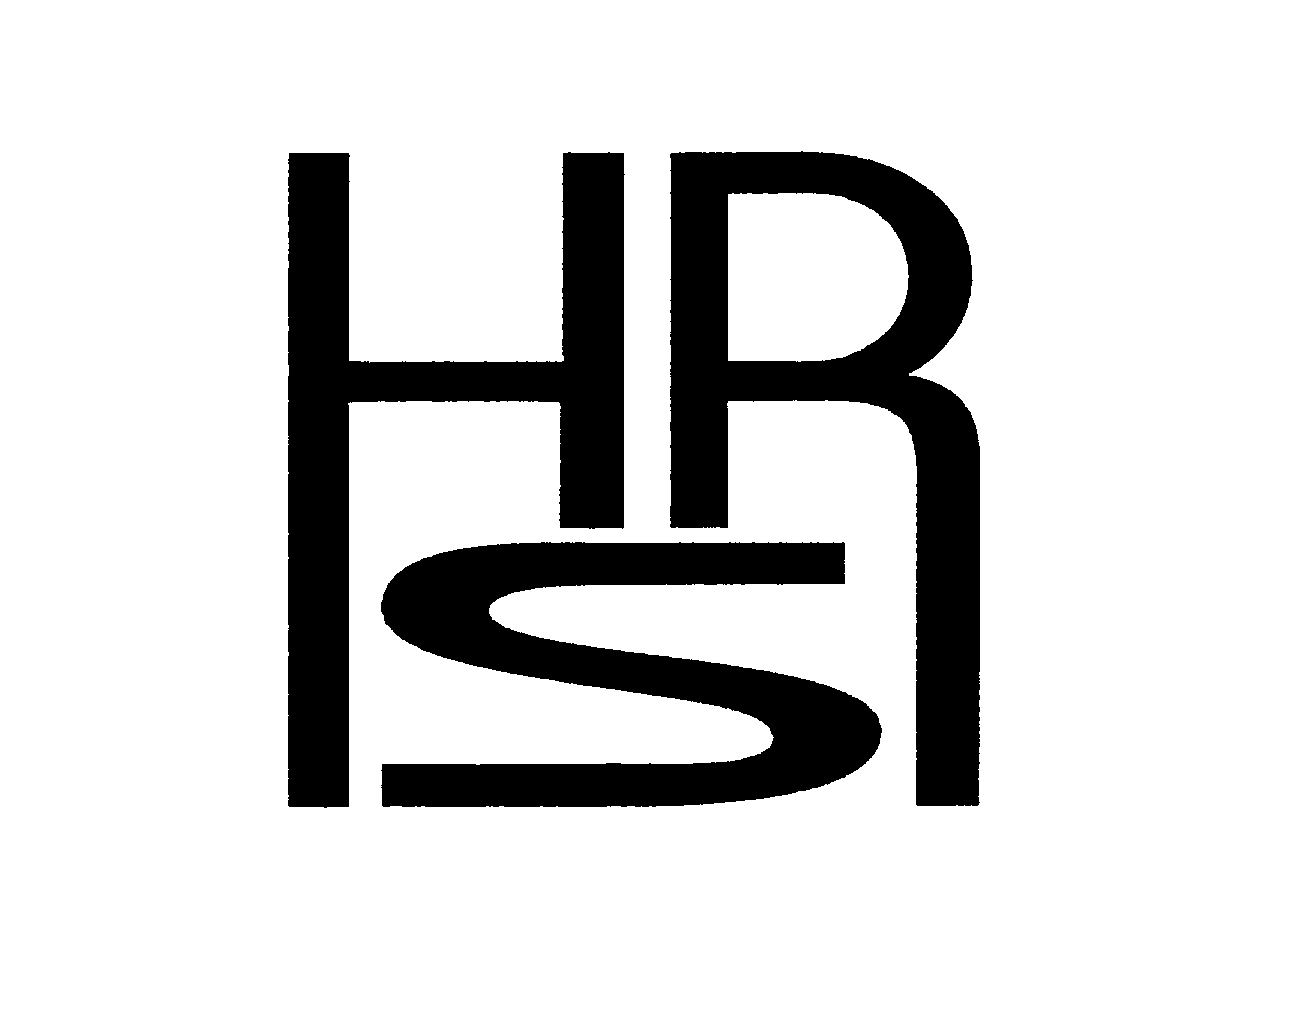 Trademark Logo HRS